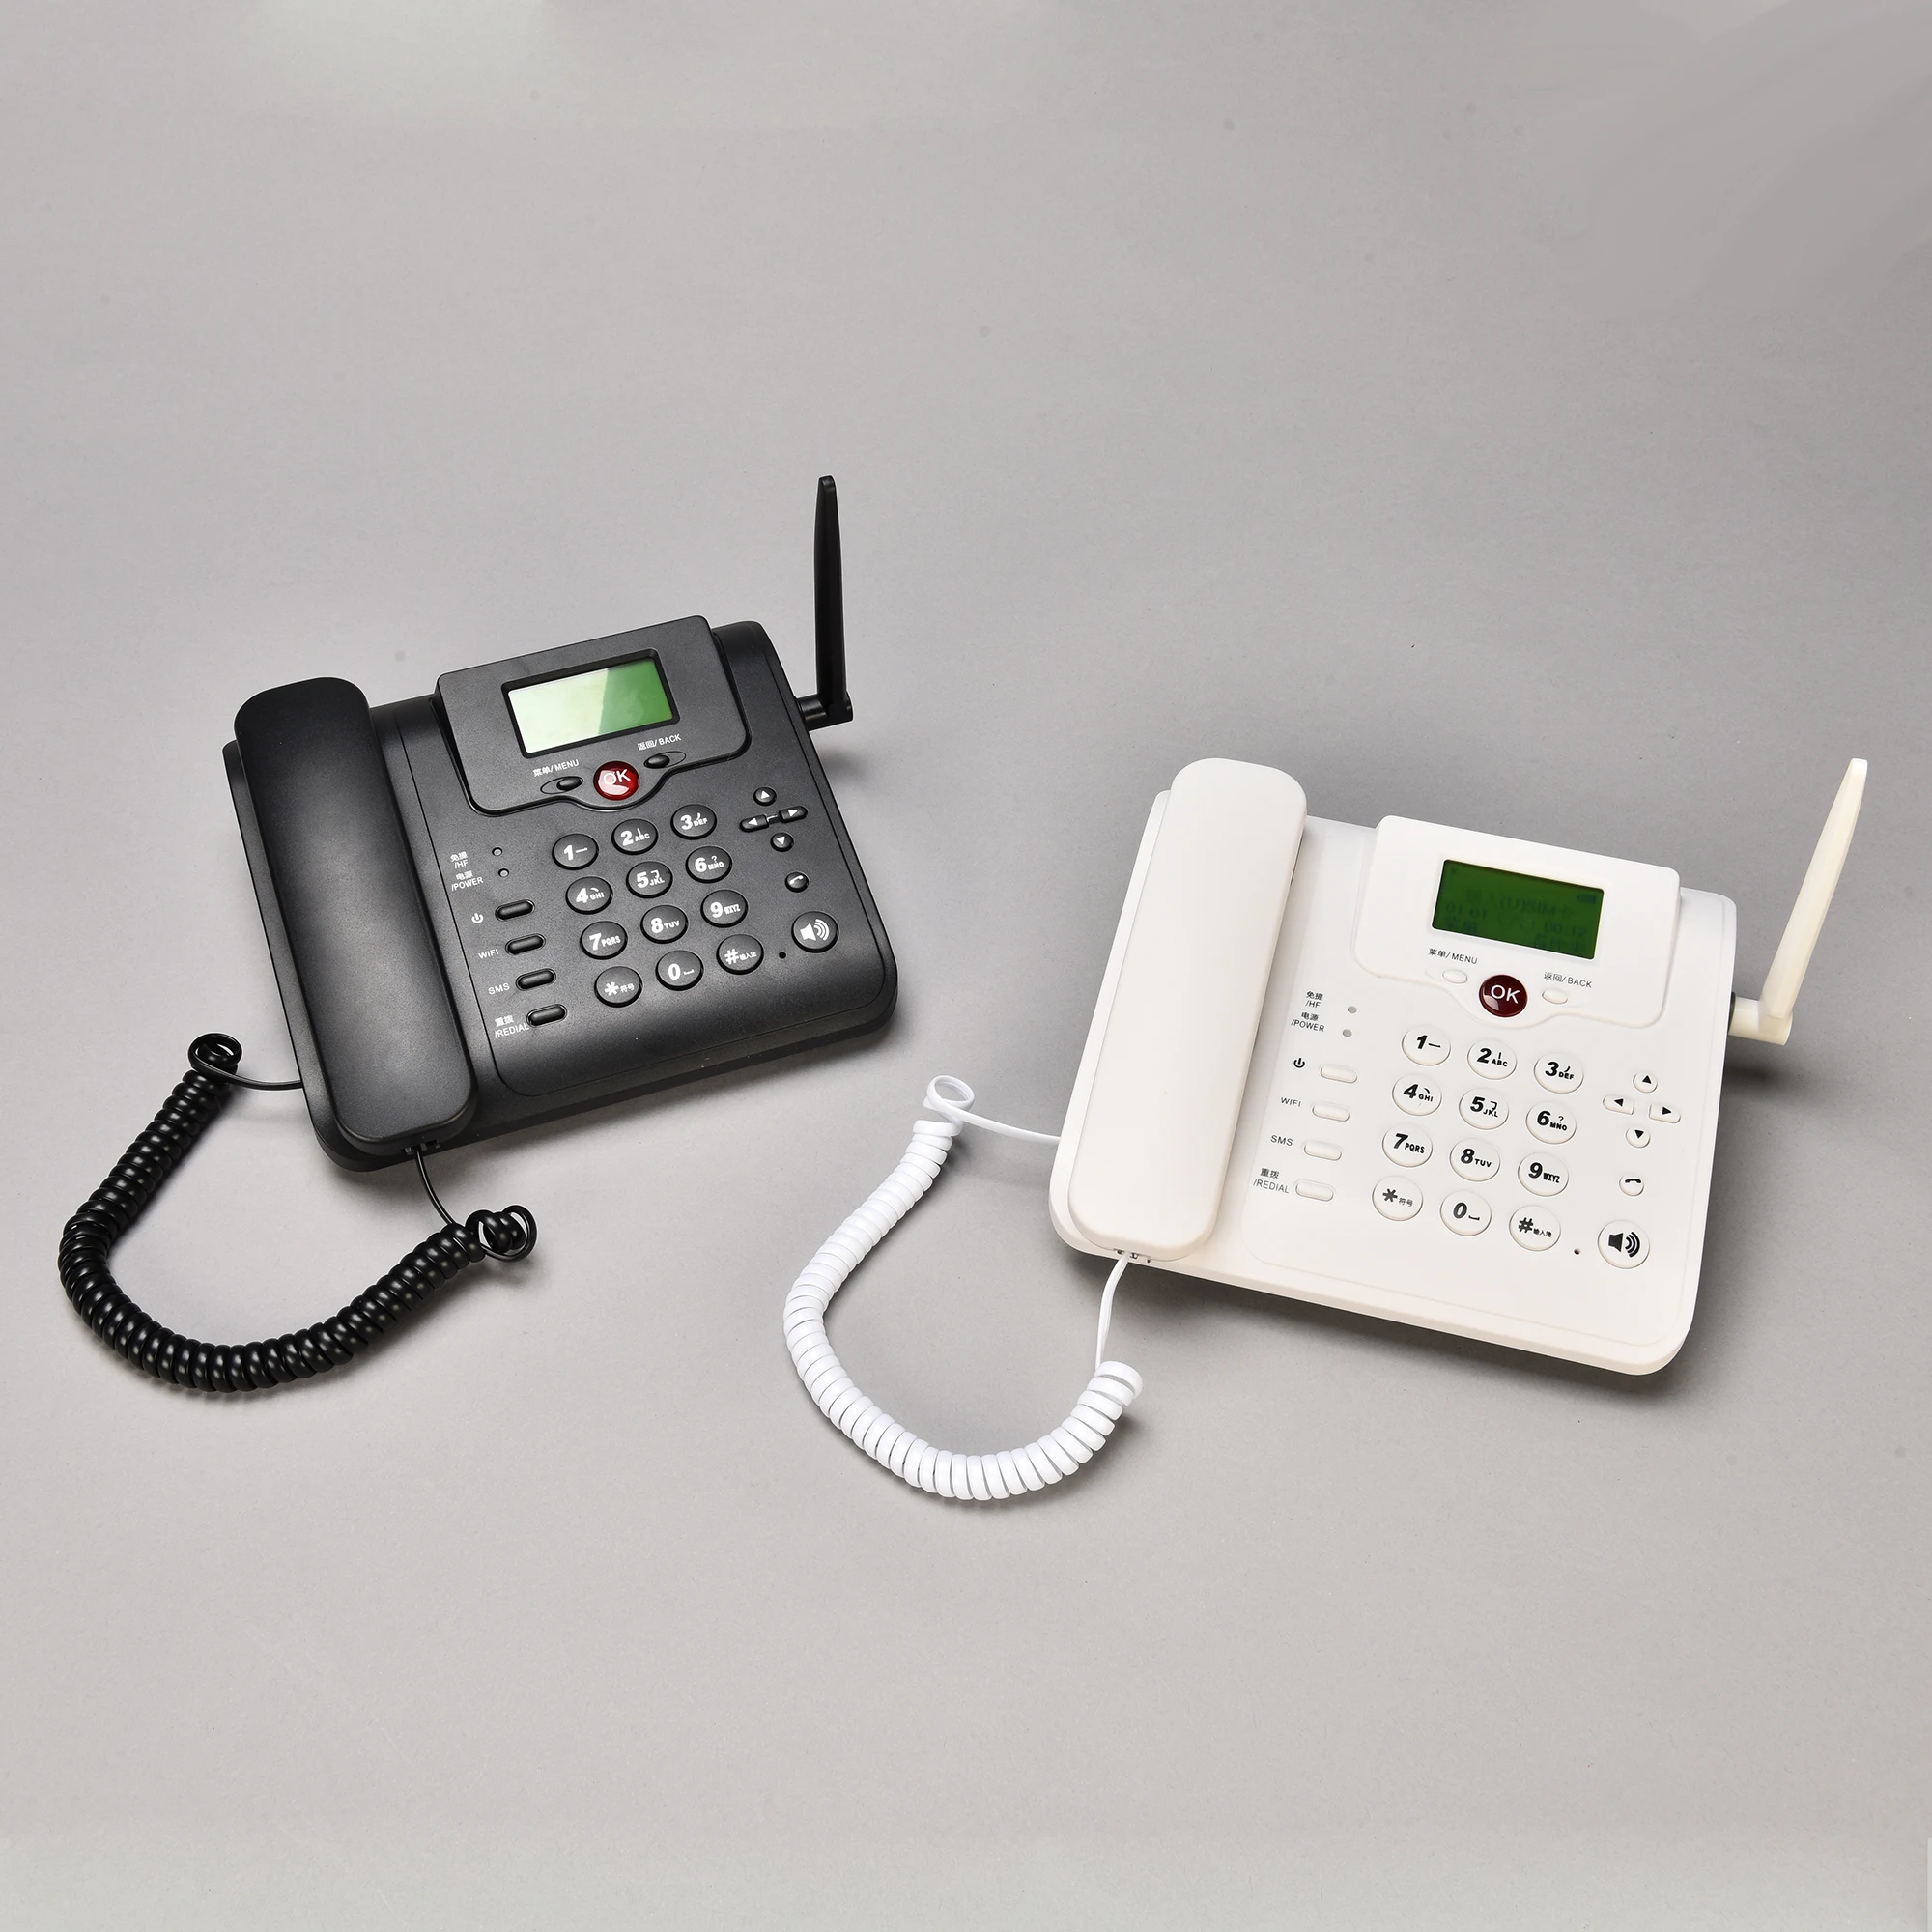 4G LTE Wireless Desktop Phone with WiFi hotspot Cordless telephone with RJ45 MIFI Port  office desktop phone